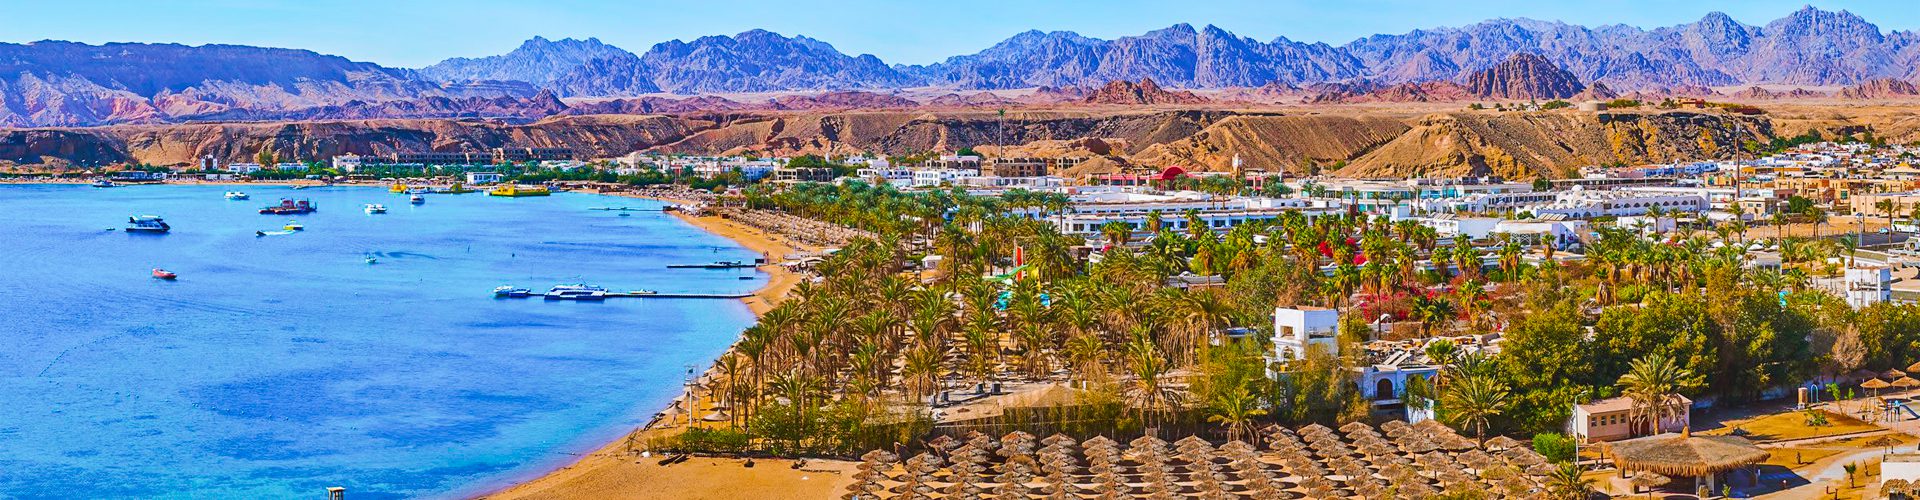 Luxury Hotels in Hurghada and Sharm El Sheikh Egypt